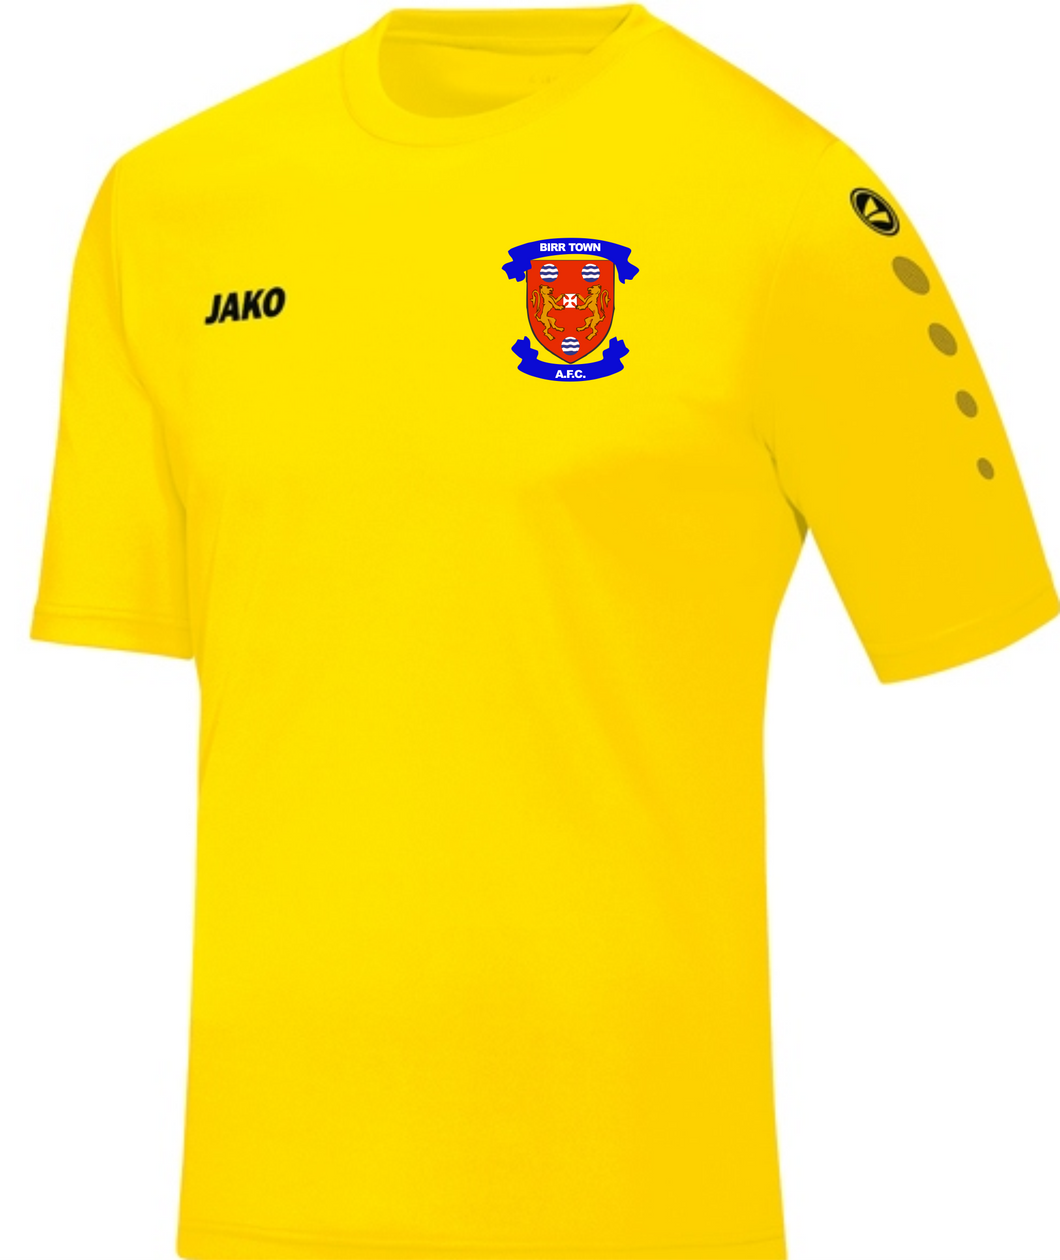 Kids JAKO Birr Town AFC Yellow Training Jersey BT4233YK